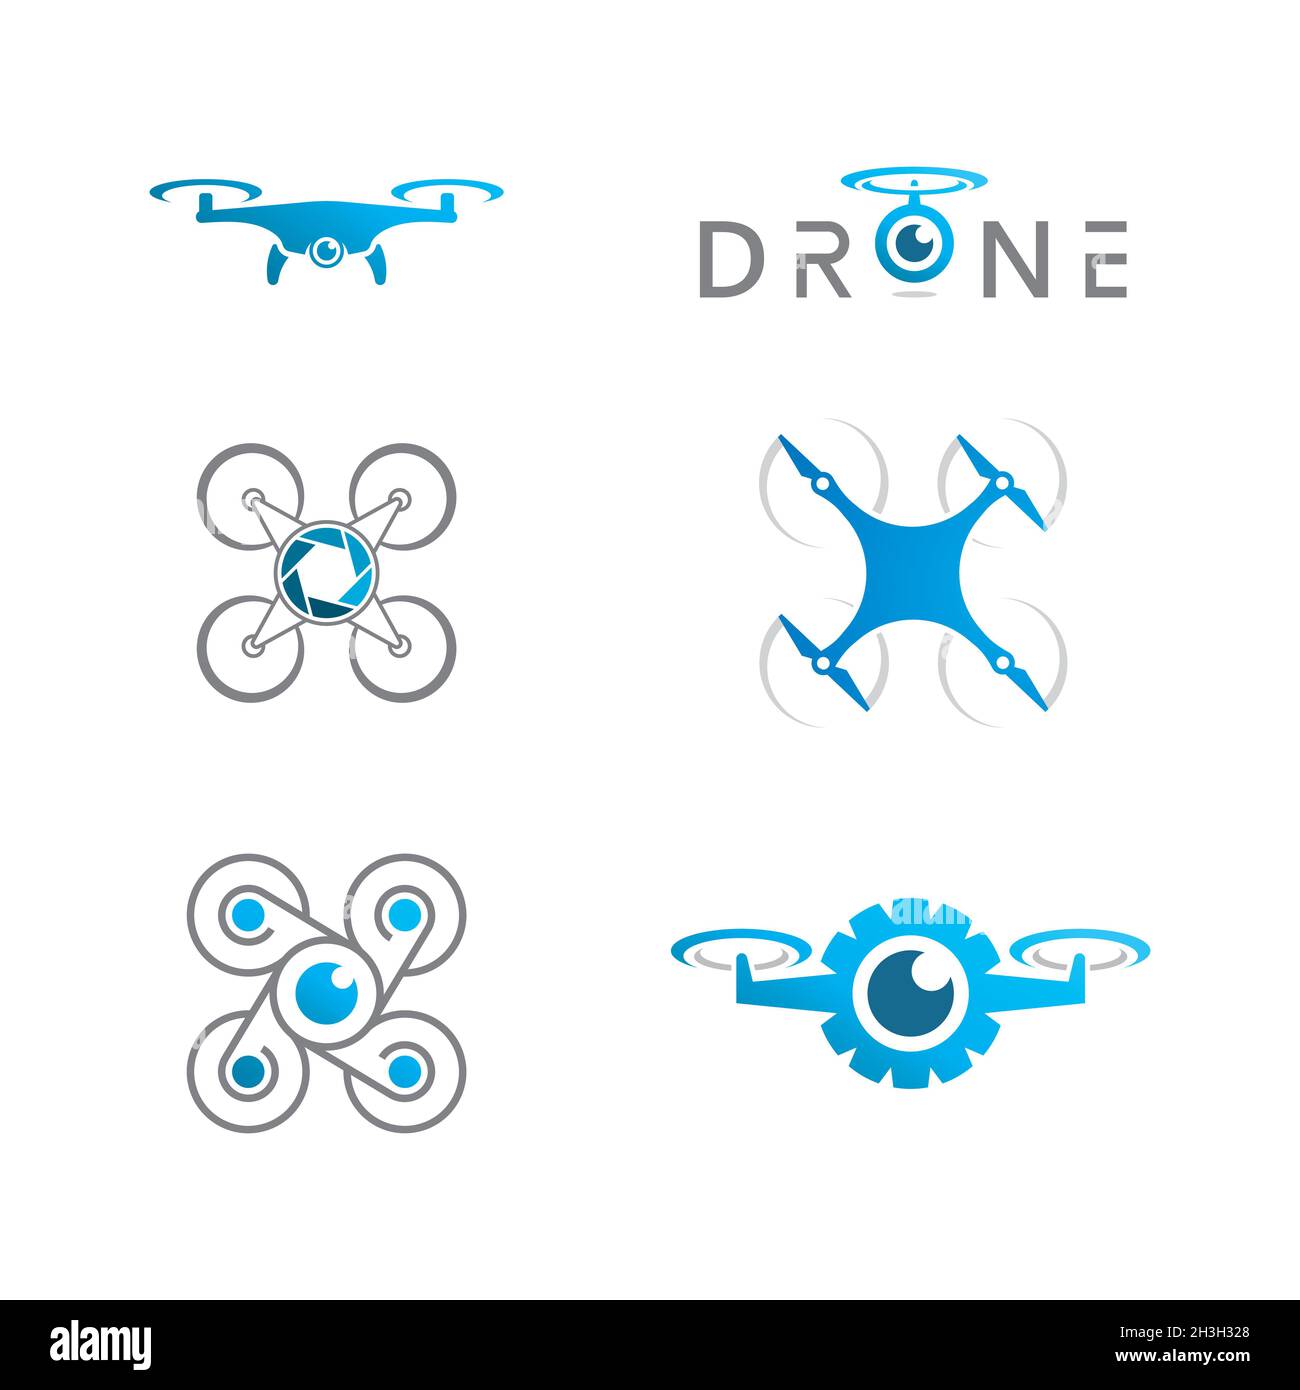 Drone vector icon design illustration template Stock Photo - Alamy